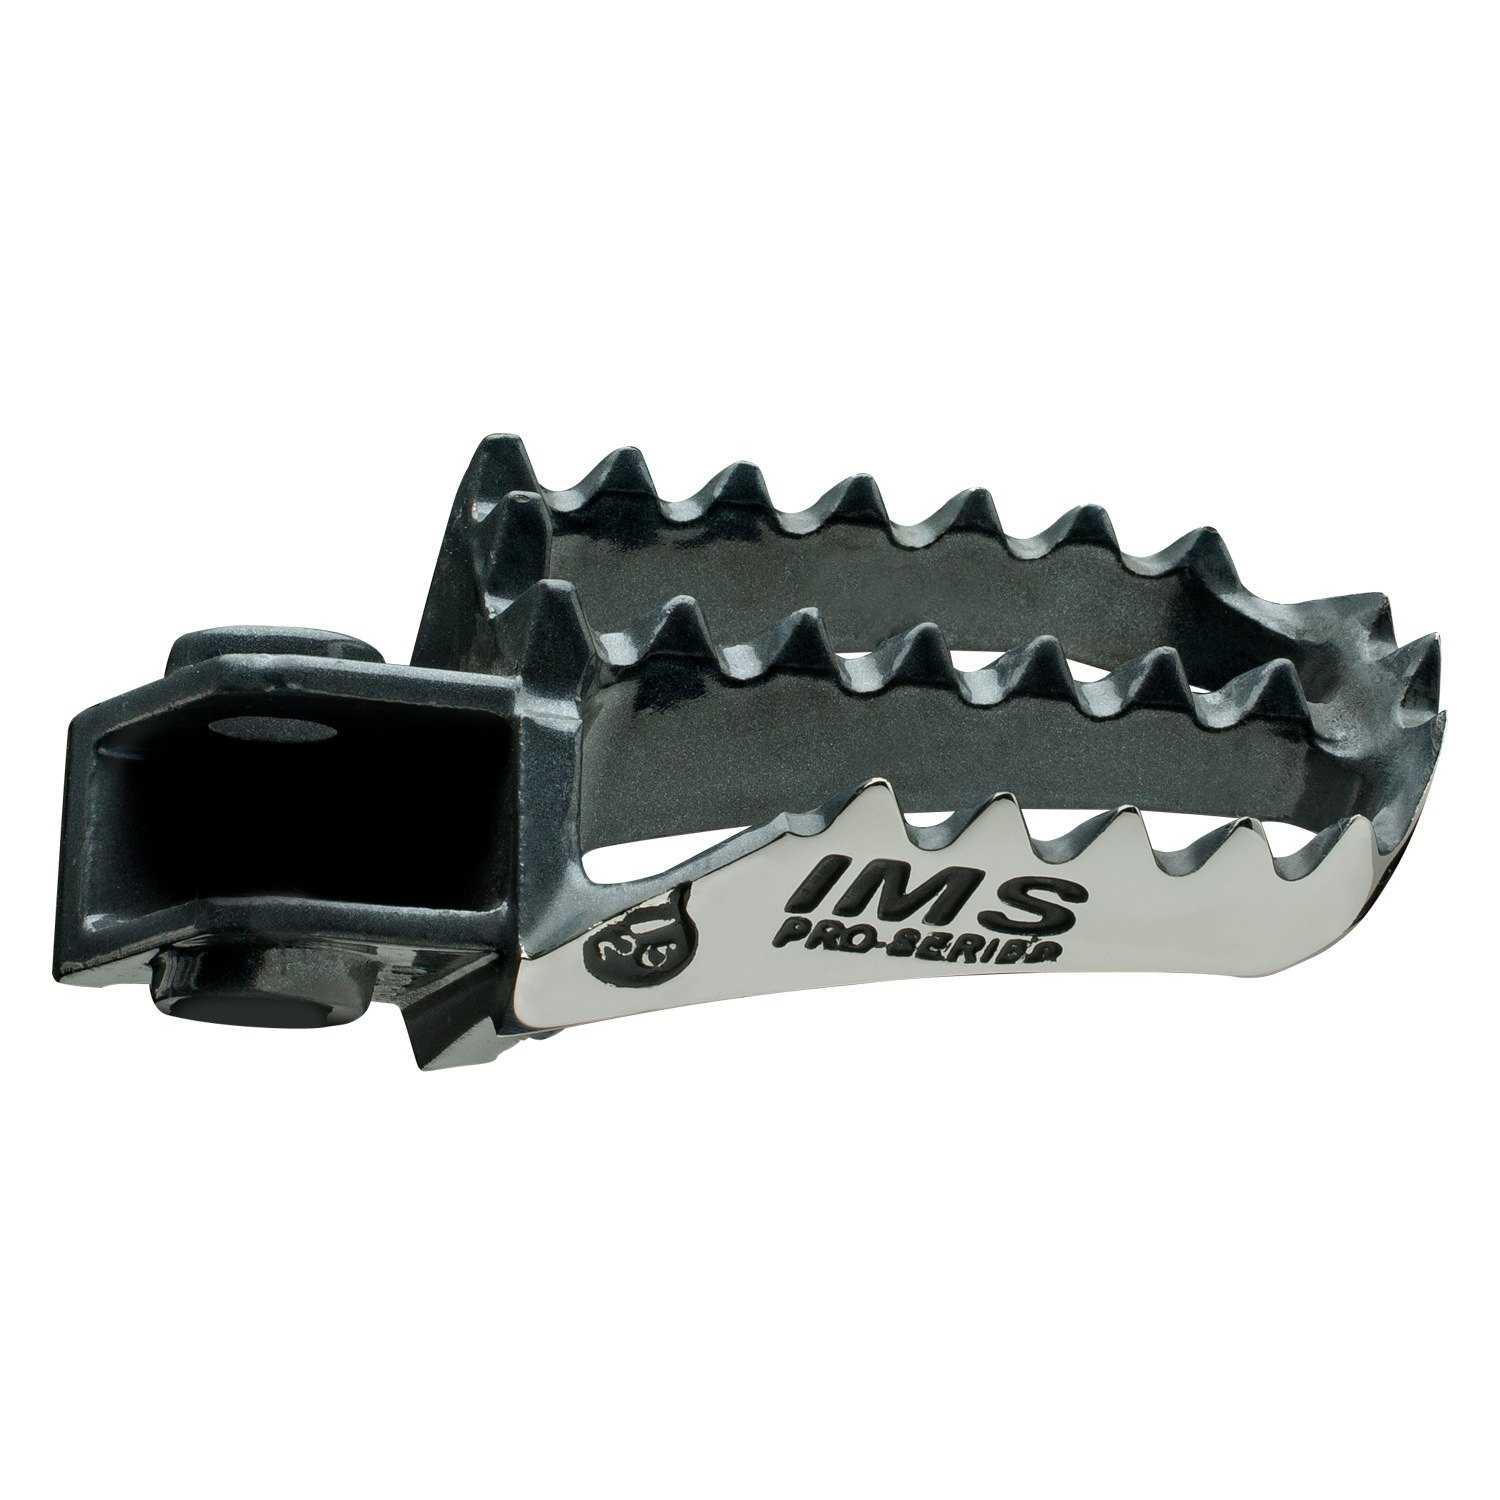 IMS Pro Series Stainless Steel Foot Pegs 292216-4 2922164 Pair